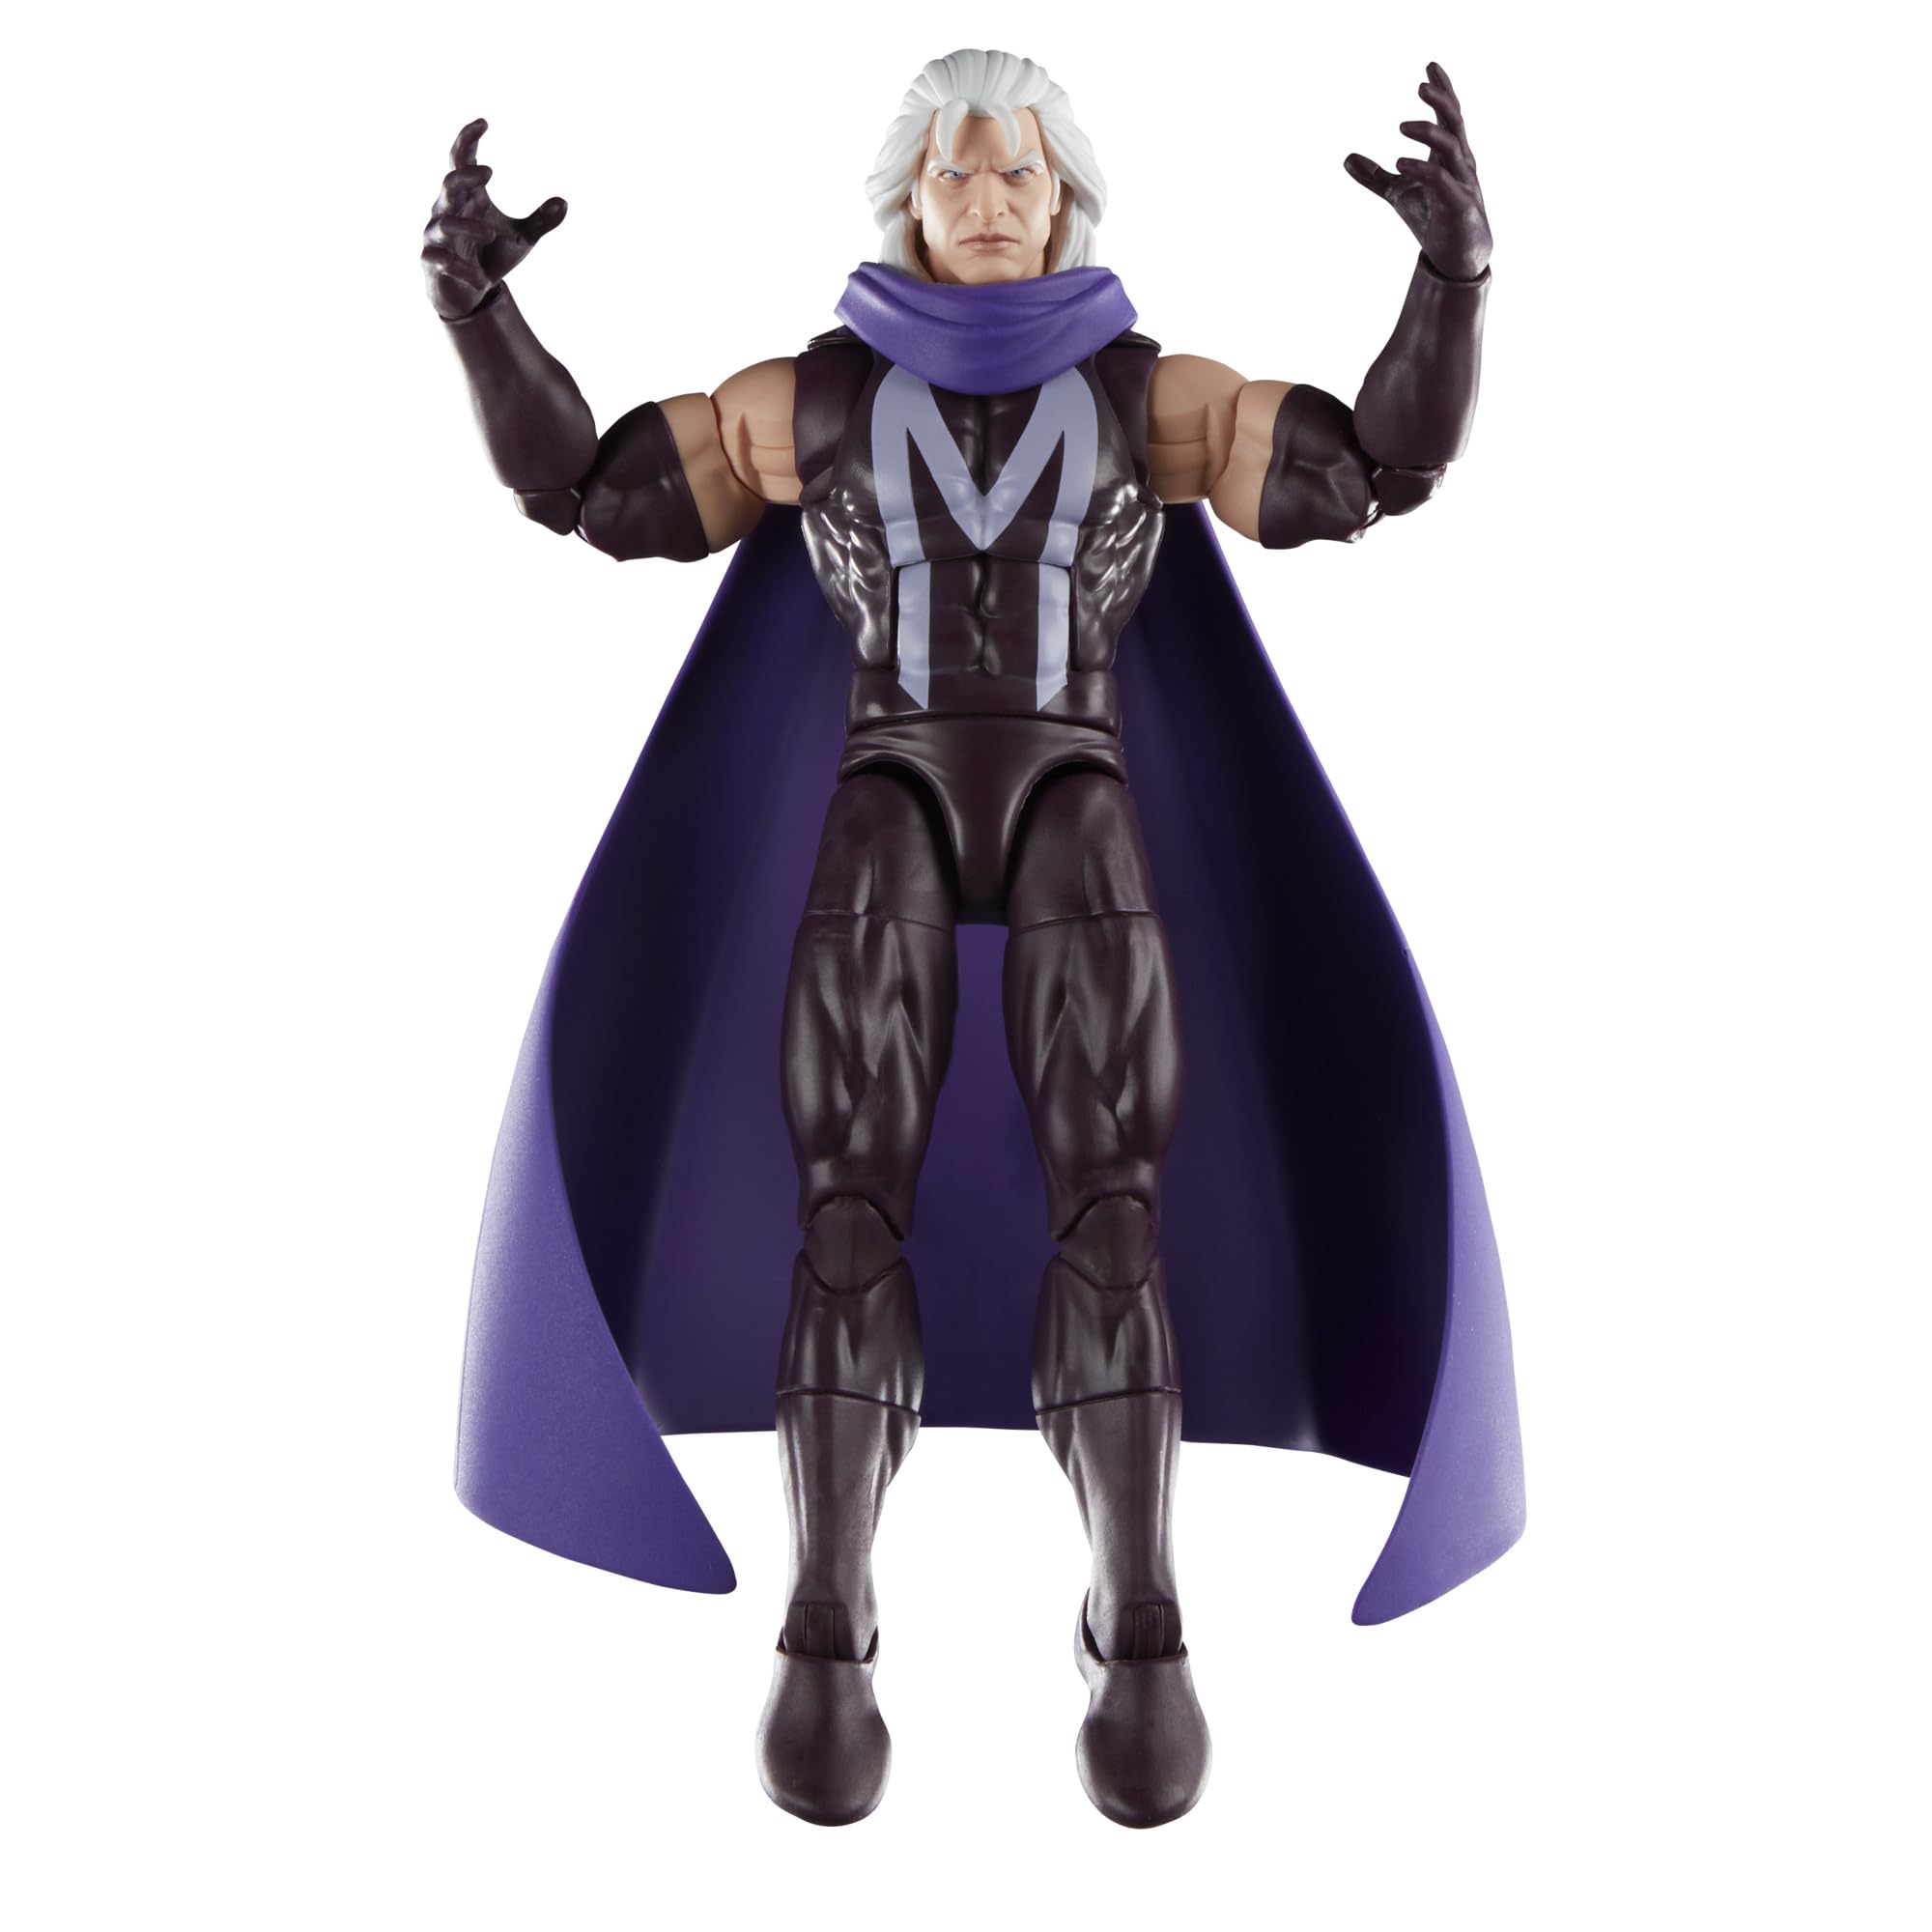 Marvel Legends Series Magneto, X-Men ‘97 Collectible 6-Inch Action Figure